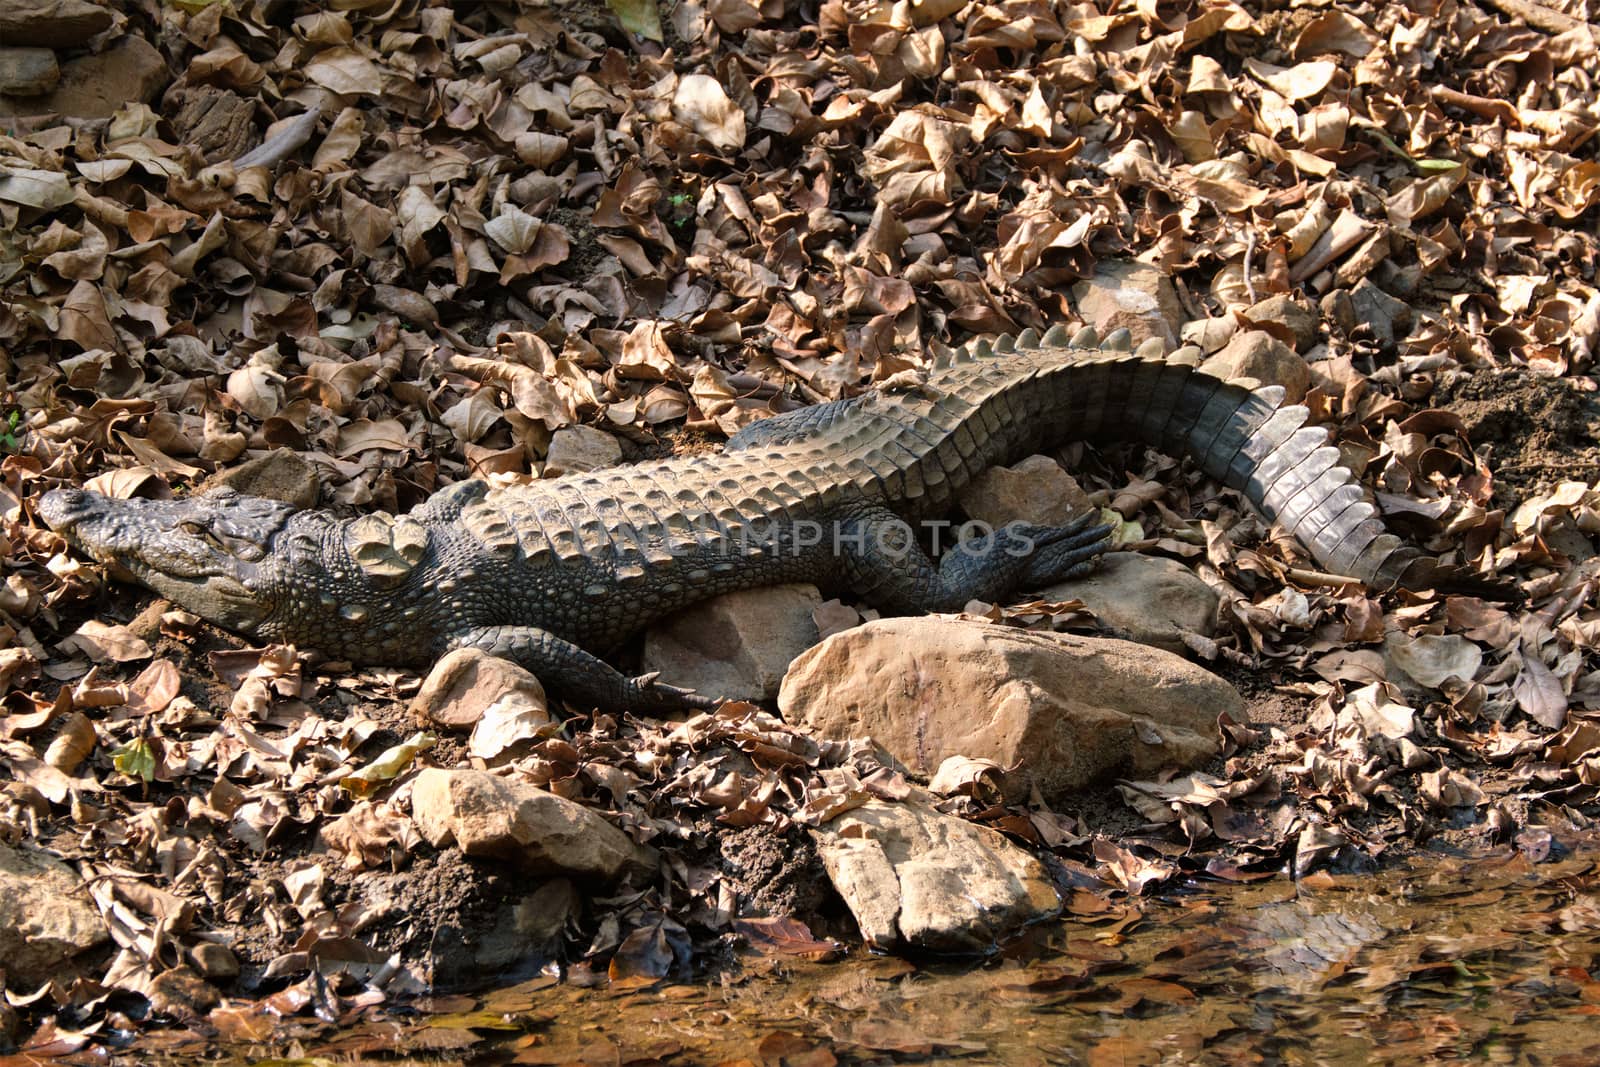 Snub Nosed Marsh Crocodile mugger crocodile Crocodylus palustris by dimol